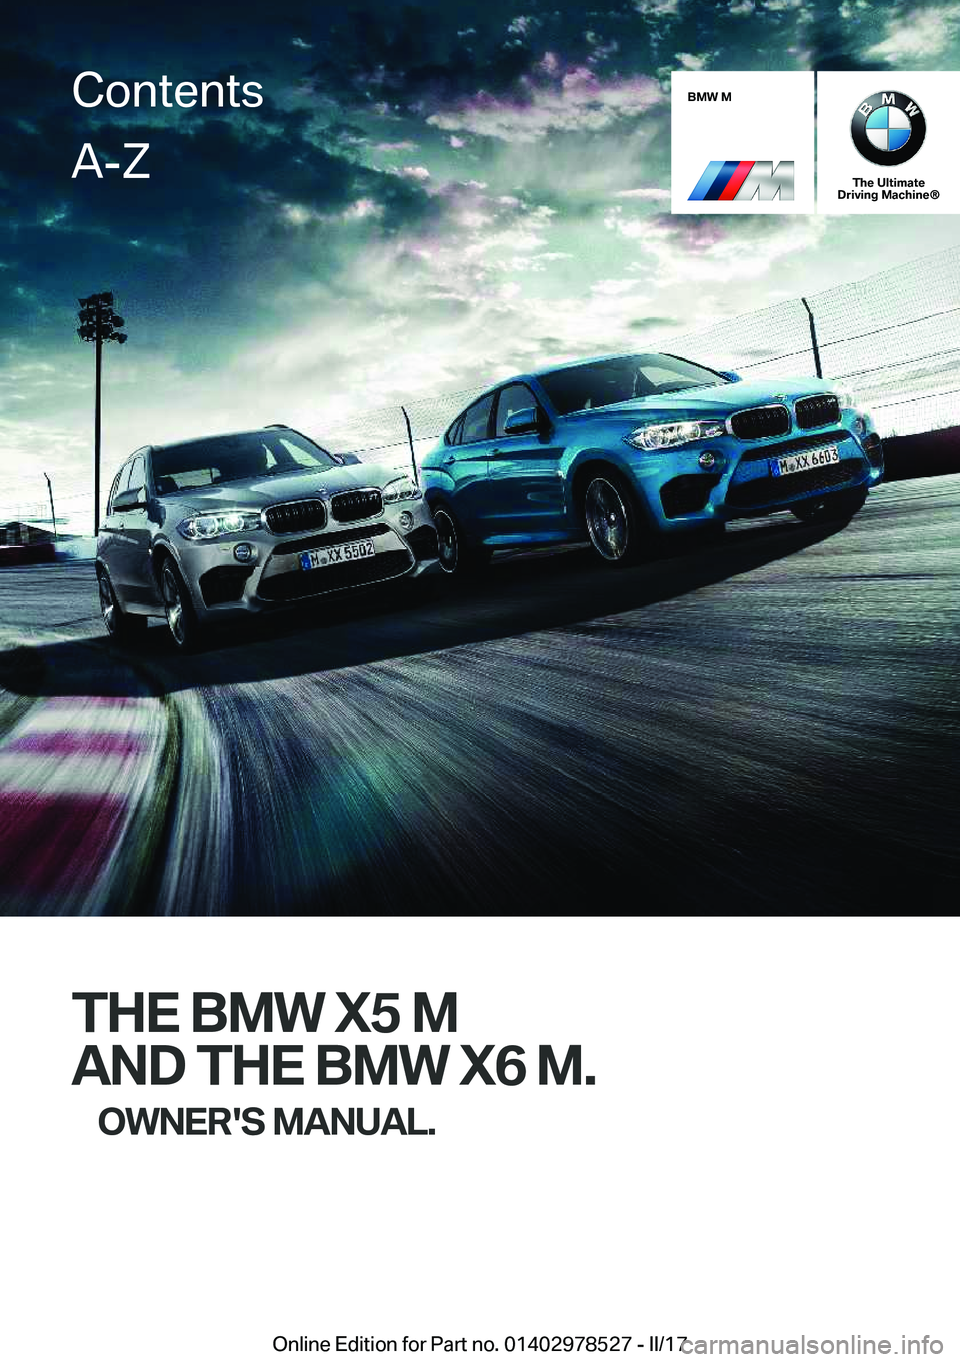 BMW X5M 2017  Owners Manual �B�M�W��M
�T�h�e��U�l�t�i�m�a�t�e
�D�r�i�v�i�n�g��M�a�c�h�i�n�e�n
�T�H�E��B�M�W��X�5��M
�A�N�D��T�H�E��B�M�W��X�6��M�. �O�W�N�E�R�'�S��M�A�N�U�A�L�.
�C�o�n�t�e�n�t�s�A�-�Z
�O�n�l�i�n�e�